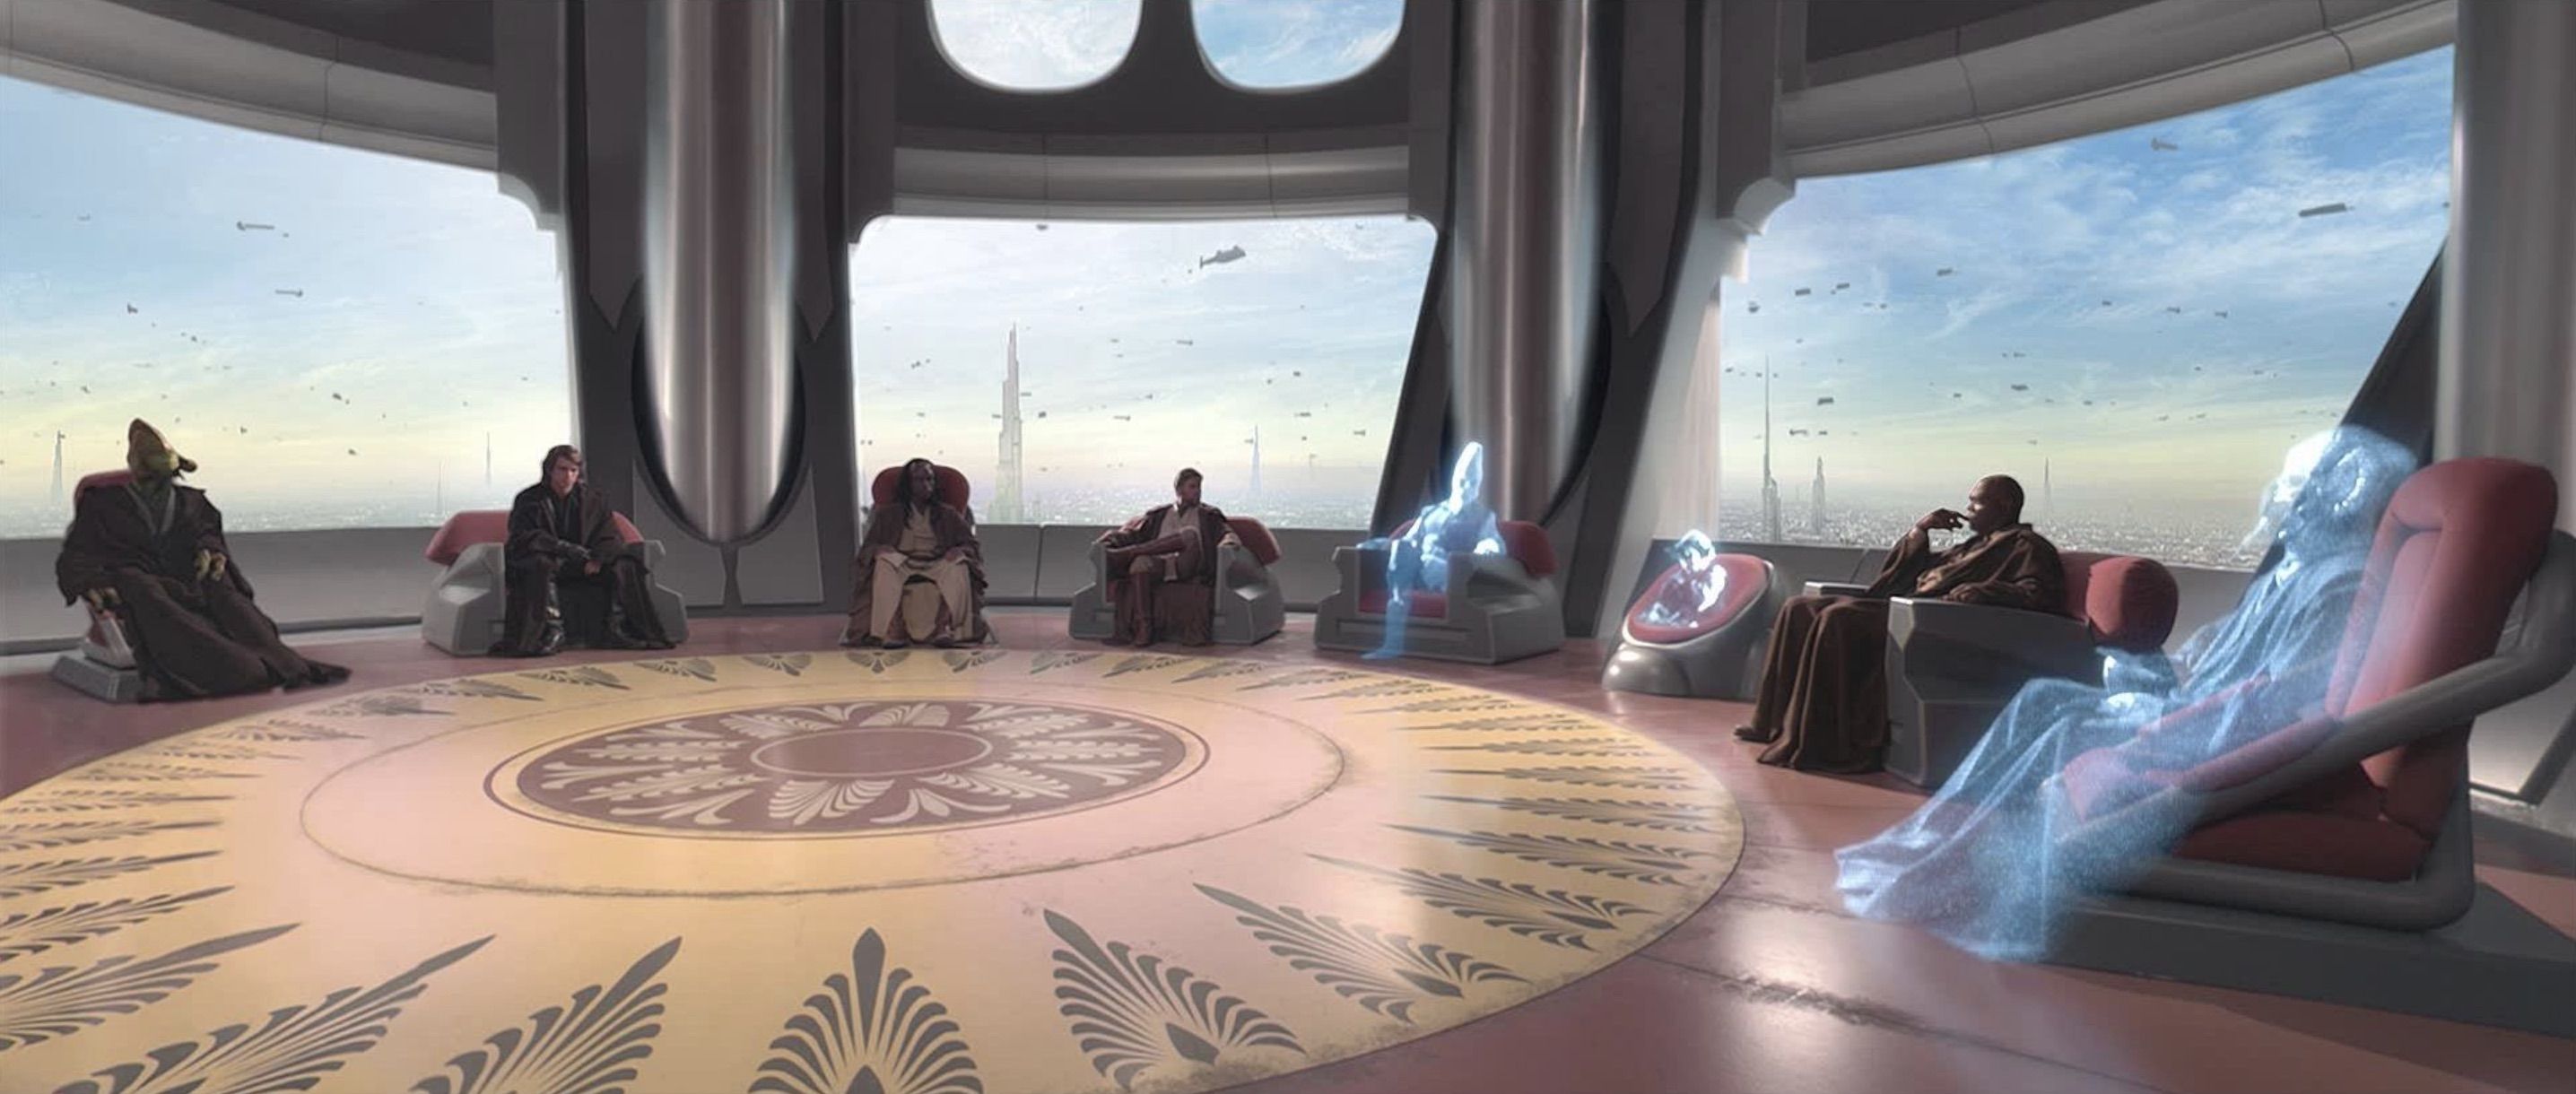 Jedi Council in Star Wars